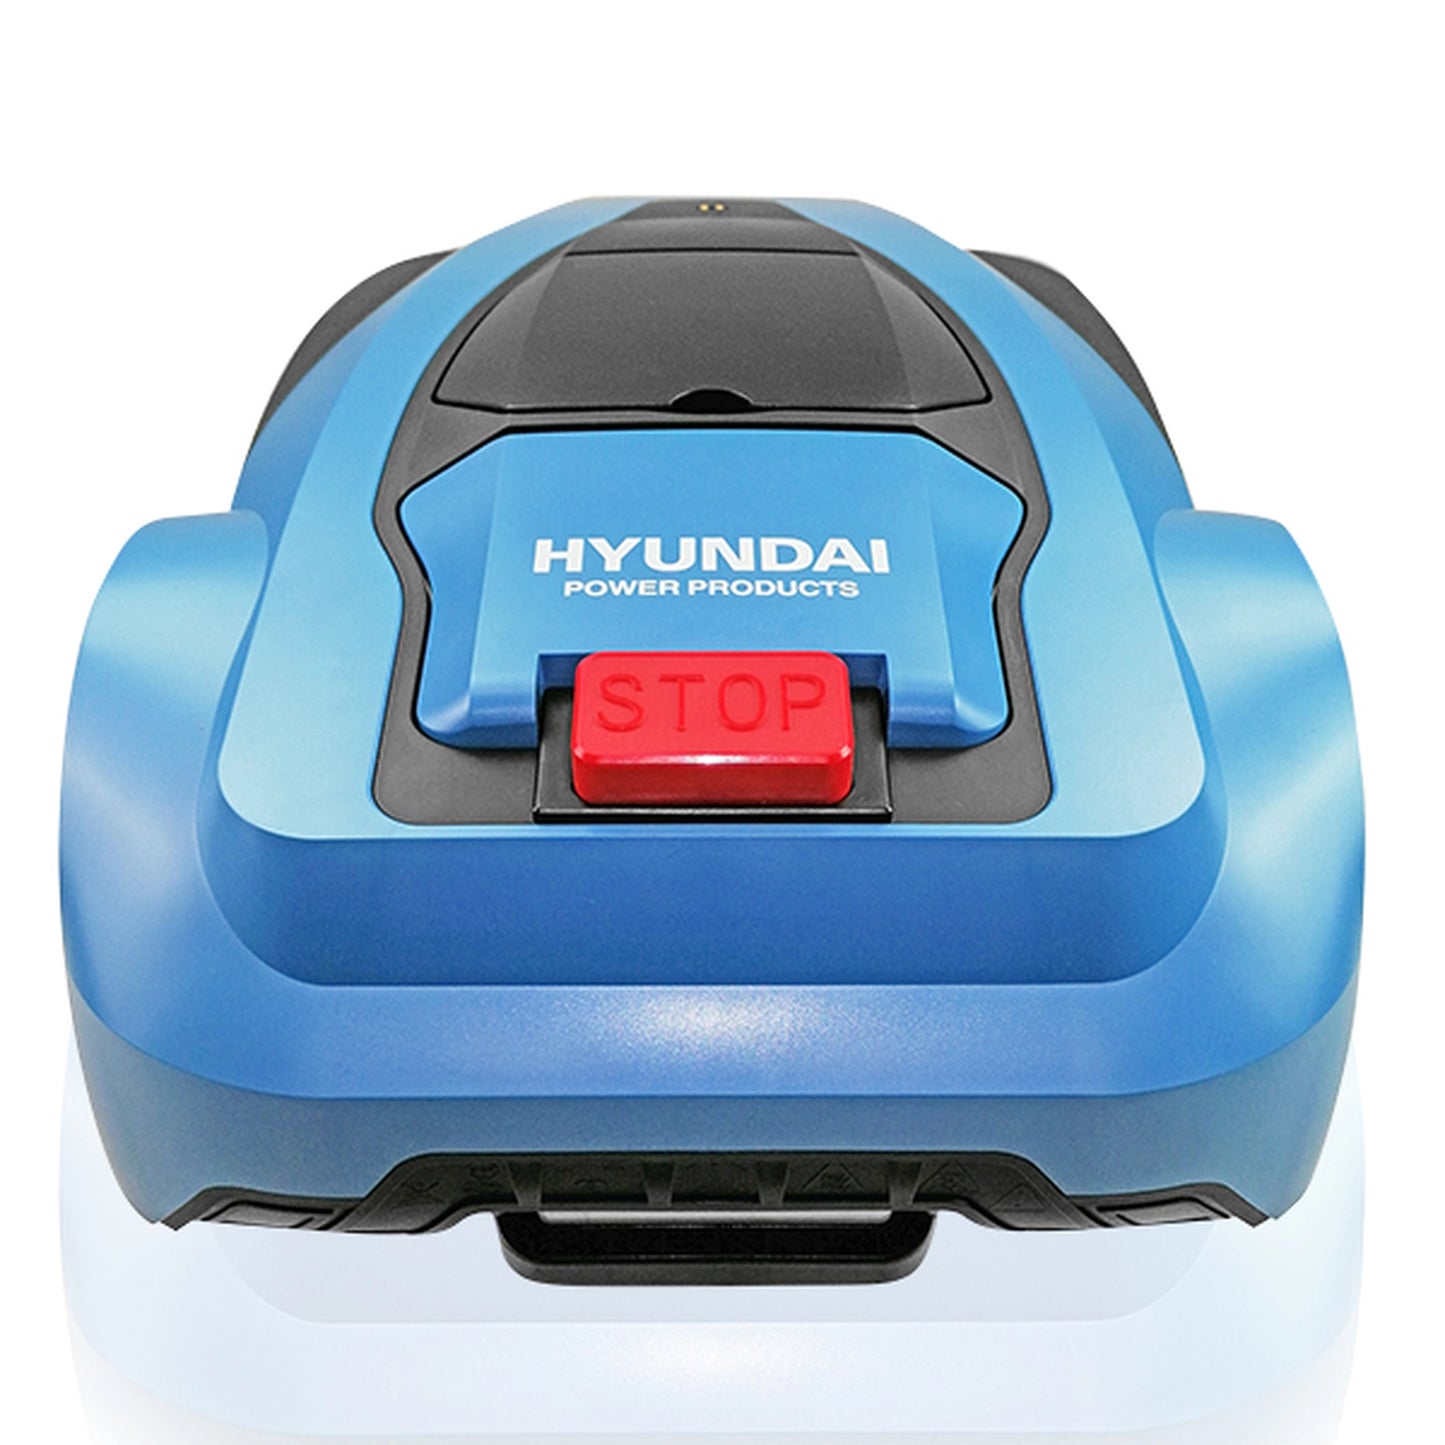 Hyundai HYRM1000 Robot Lawn Mower